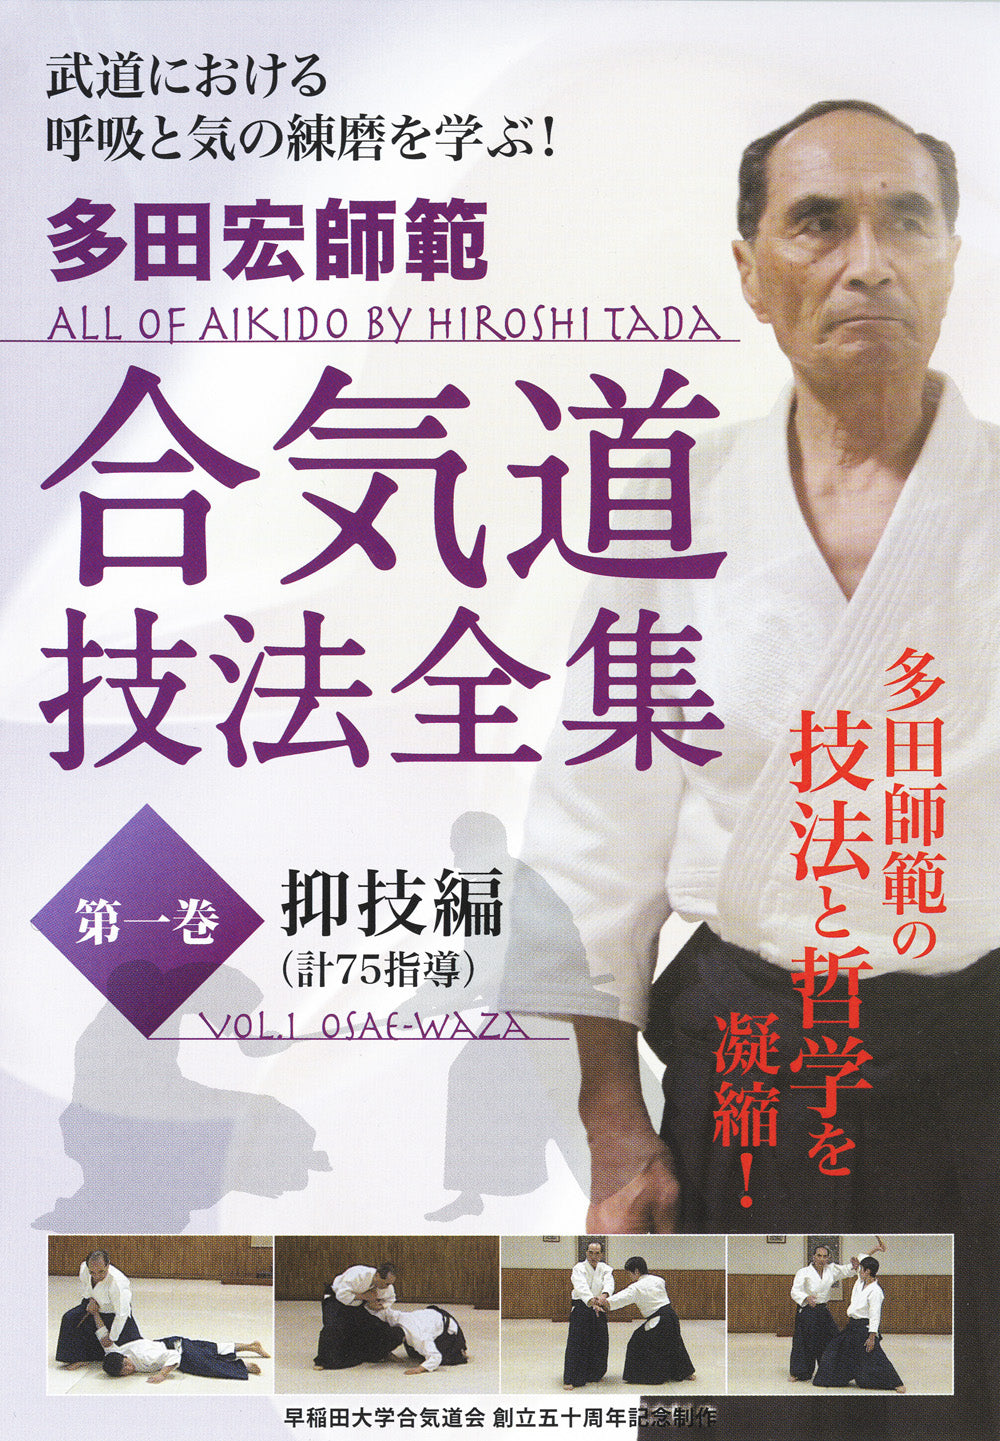 All of Aikido by Hiroshi Tada DVD 1: Osae Waza